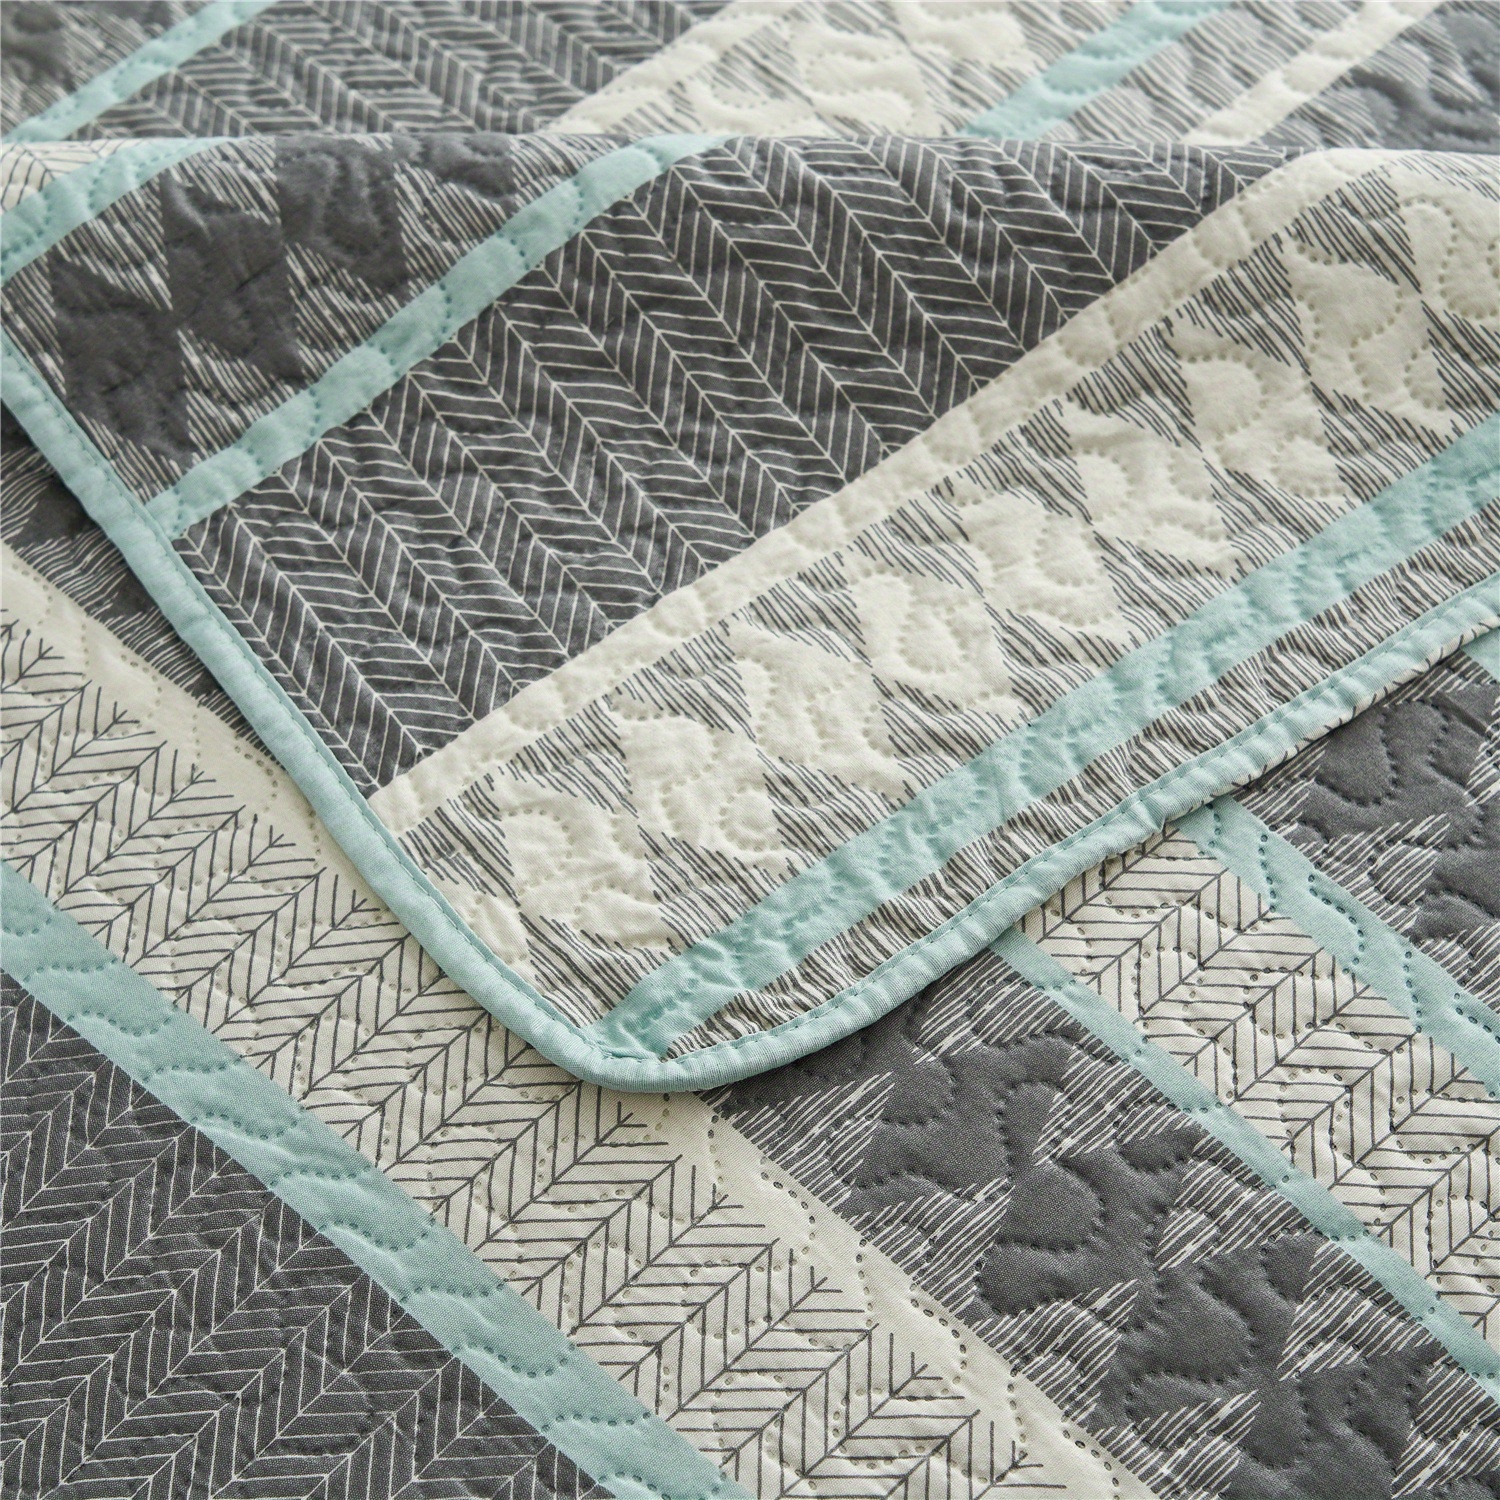 Blue Stripe Patchwork Bedspread, Light and Soft Reversible Quilt